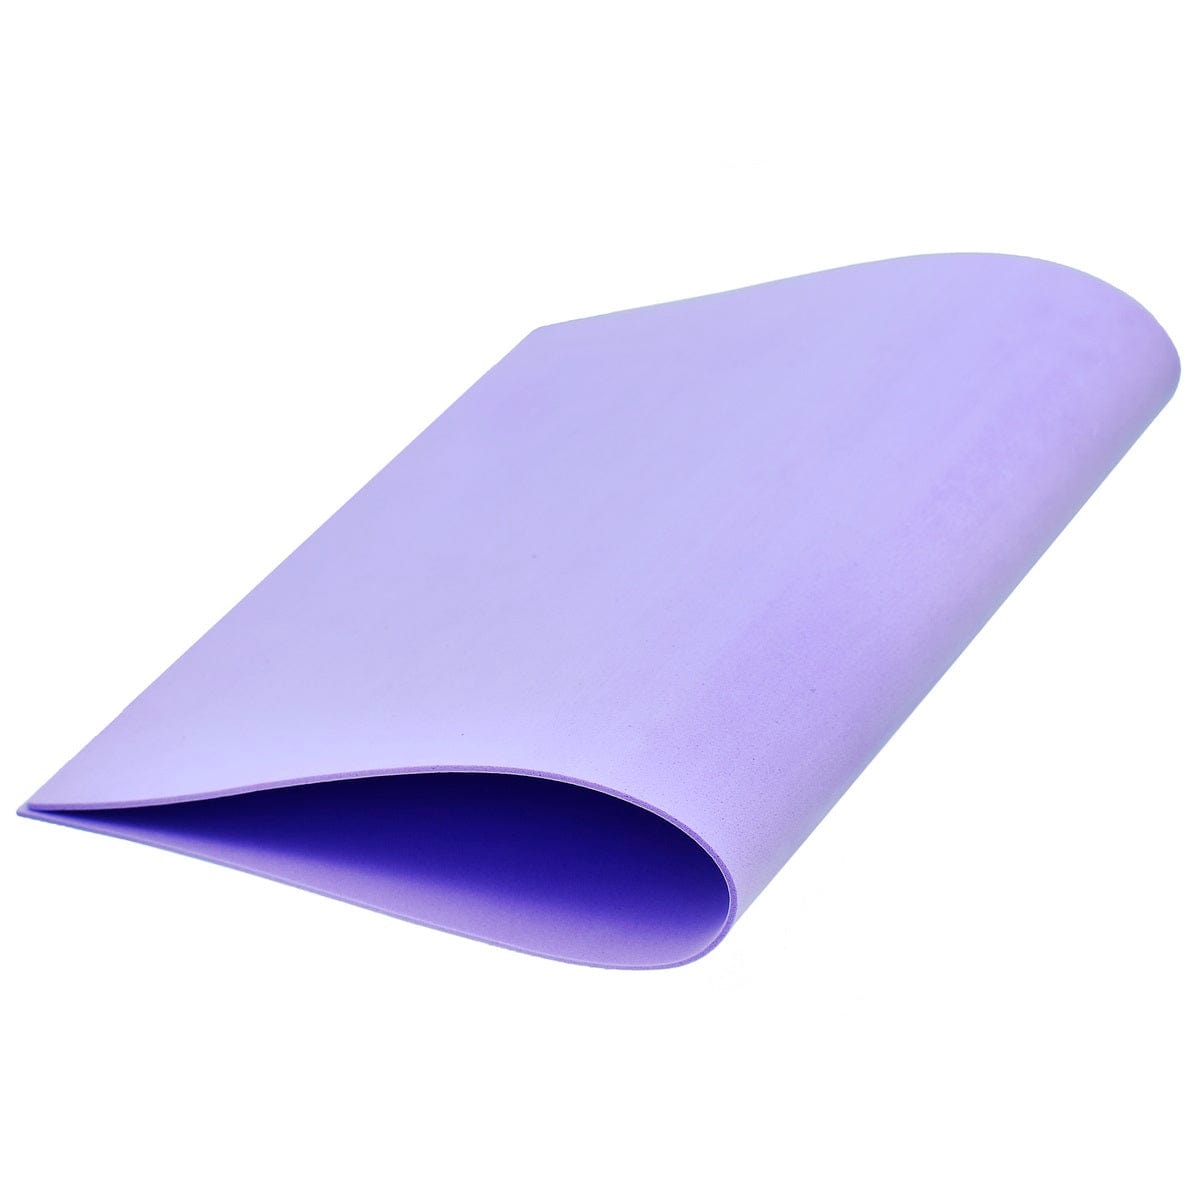 jags-mumbai Glitter Paper & Foam Sheet A4 Foam sheet without sticker L purple